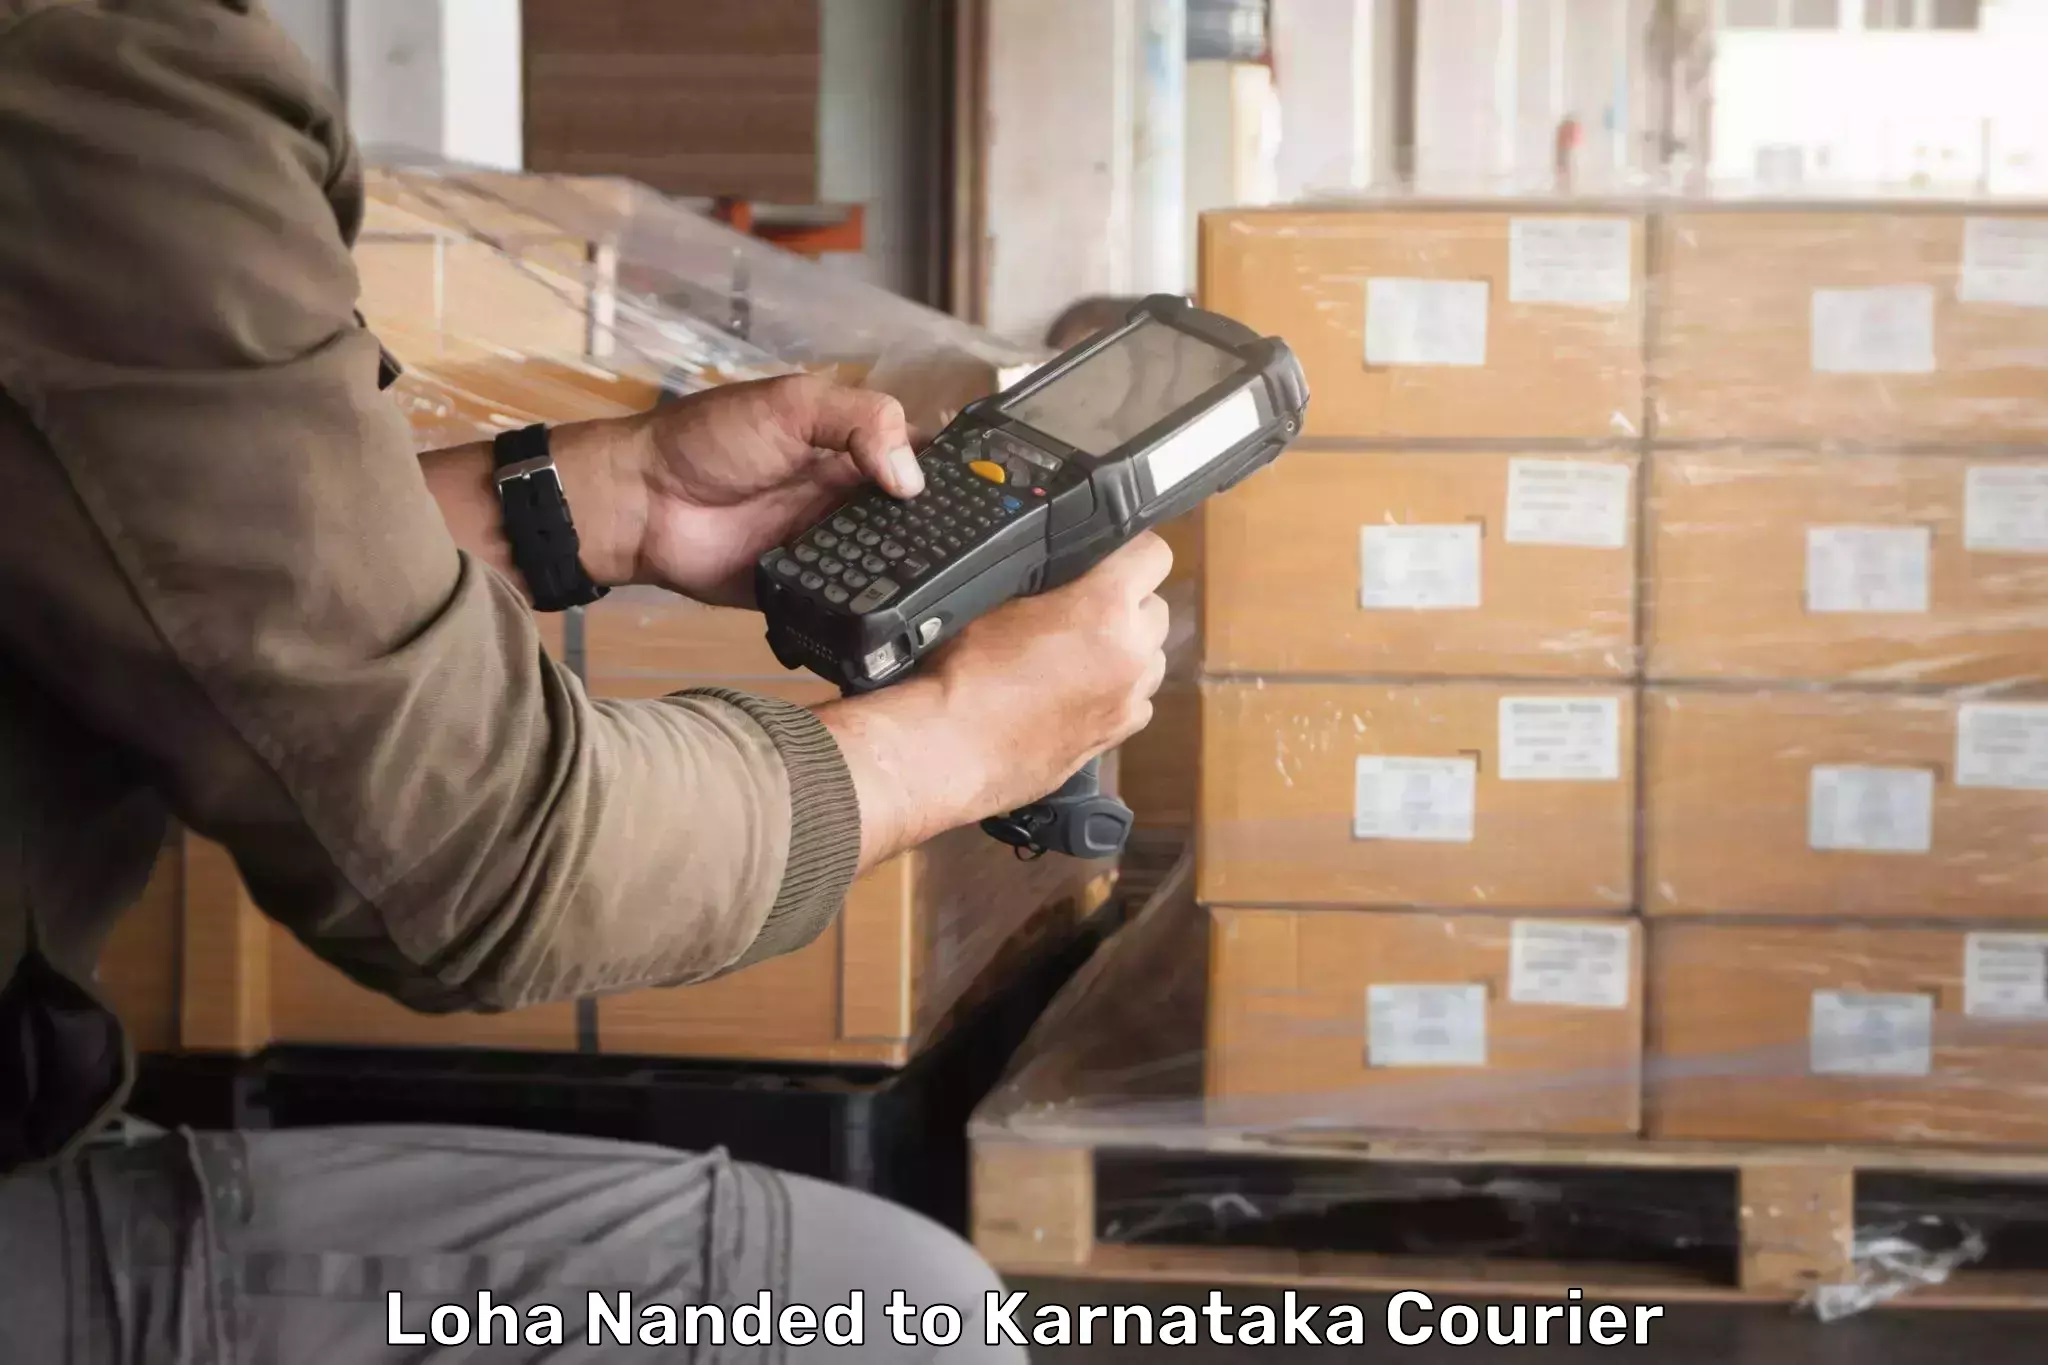 Reliable courier service Loha Nanded to Karnataka